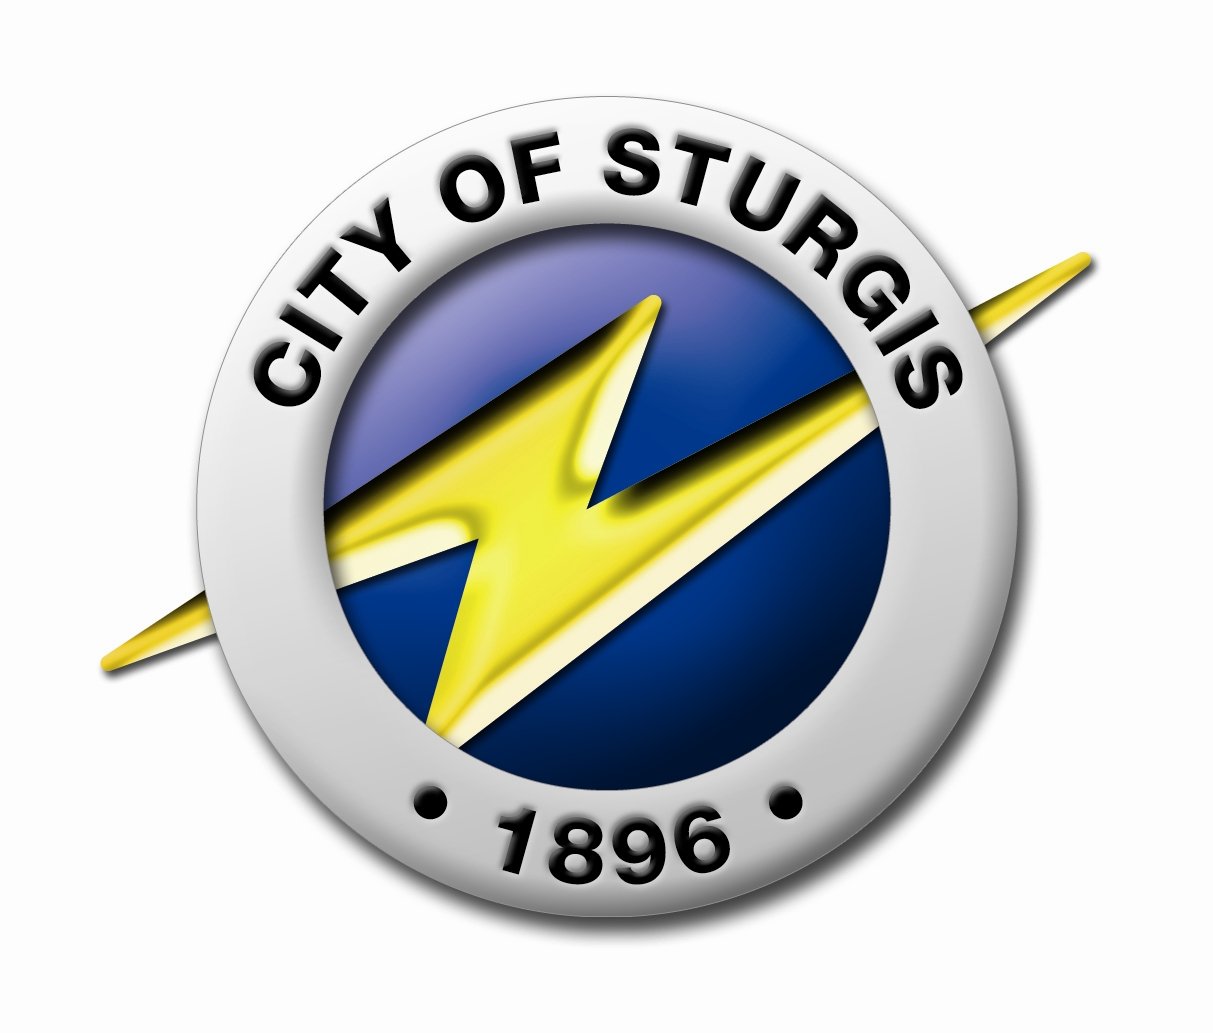 Sturgis bolt logo